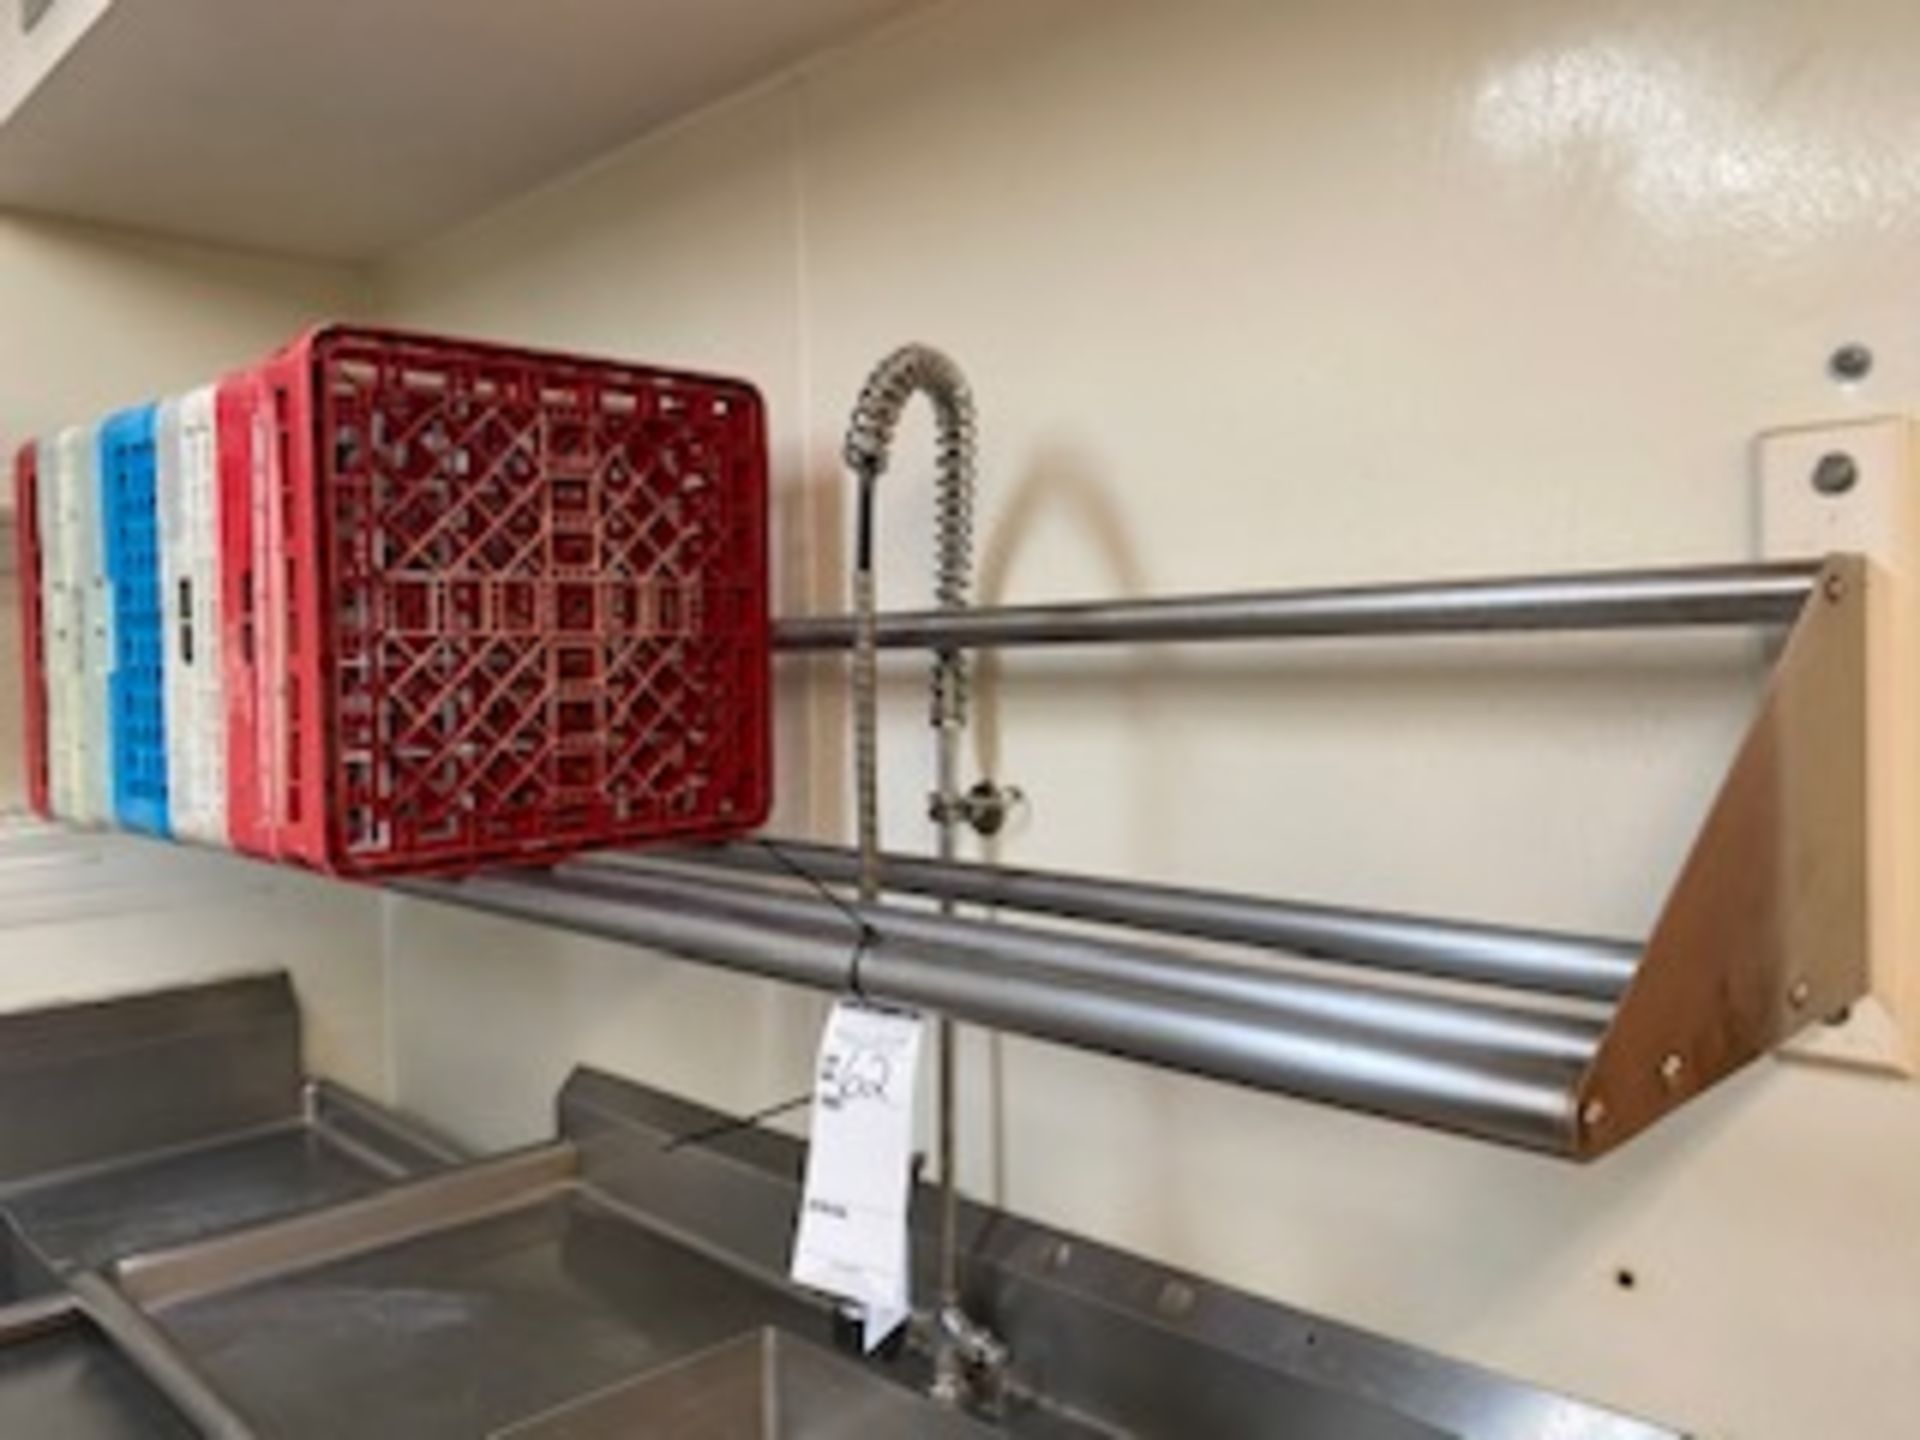 Stainless 7' wall rack with tubular draining shelf